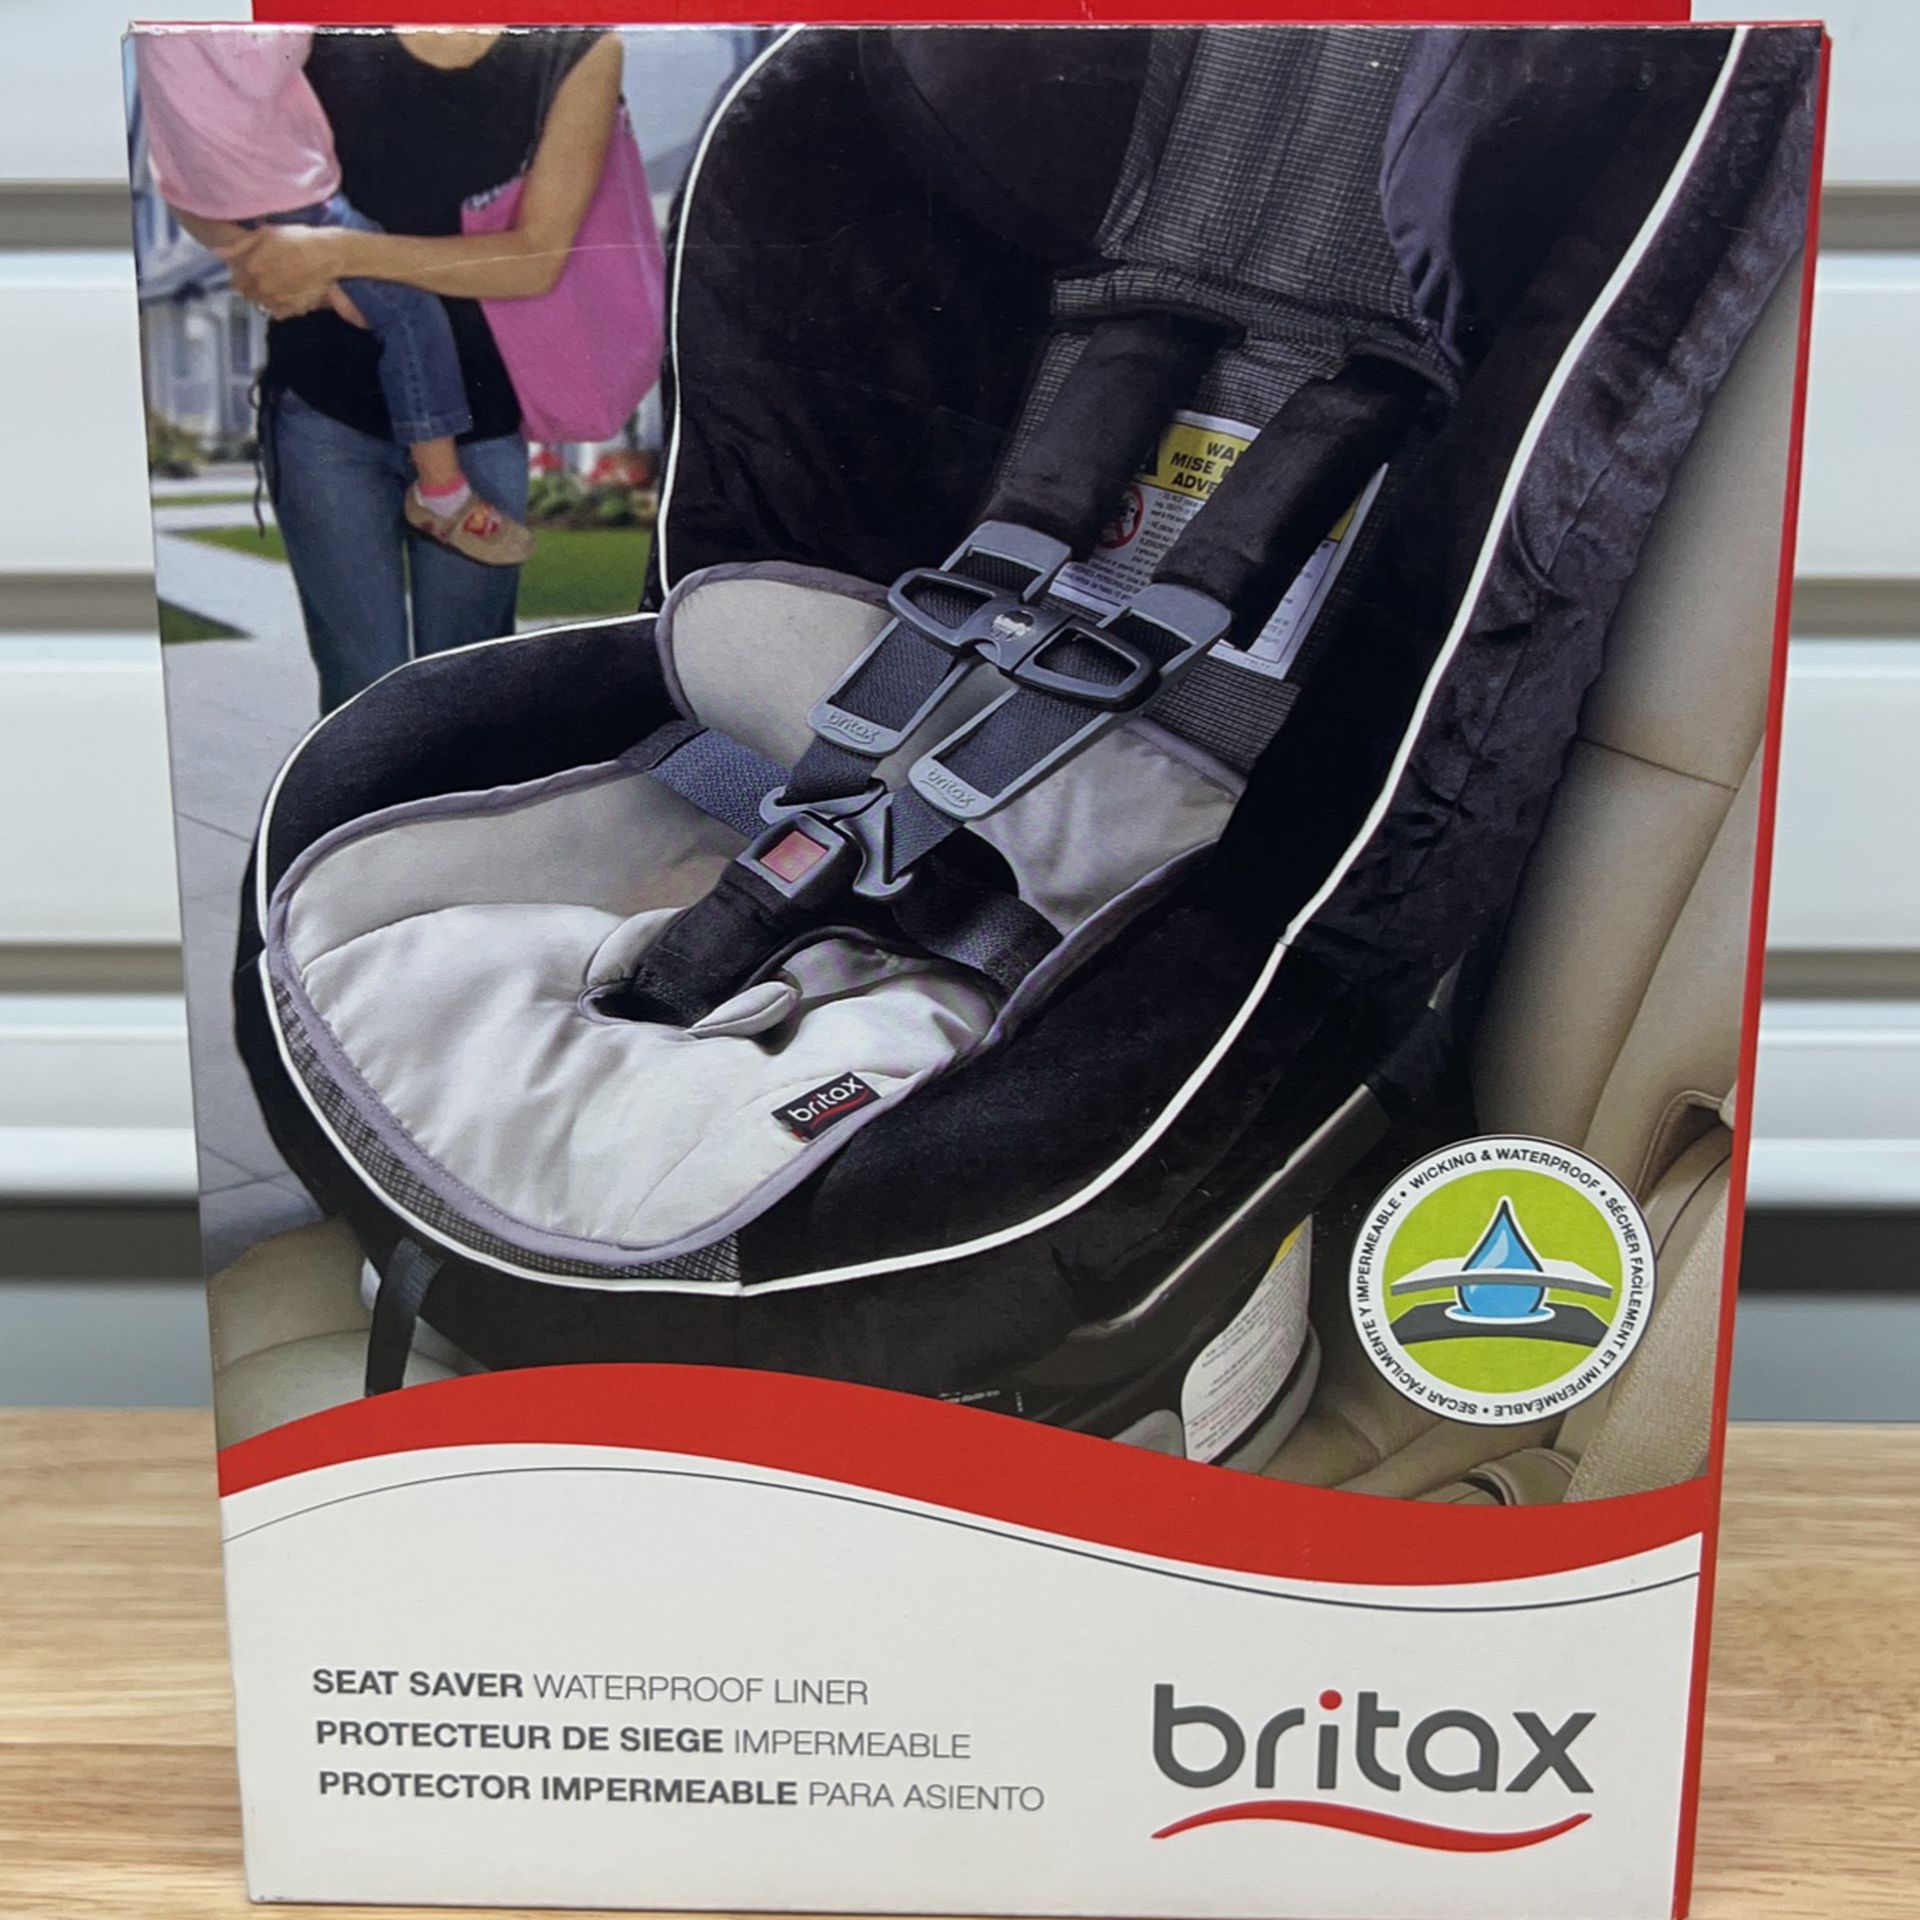 Britax Car Seat Waterproof Liner